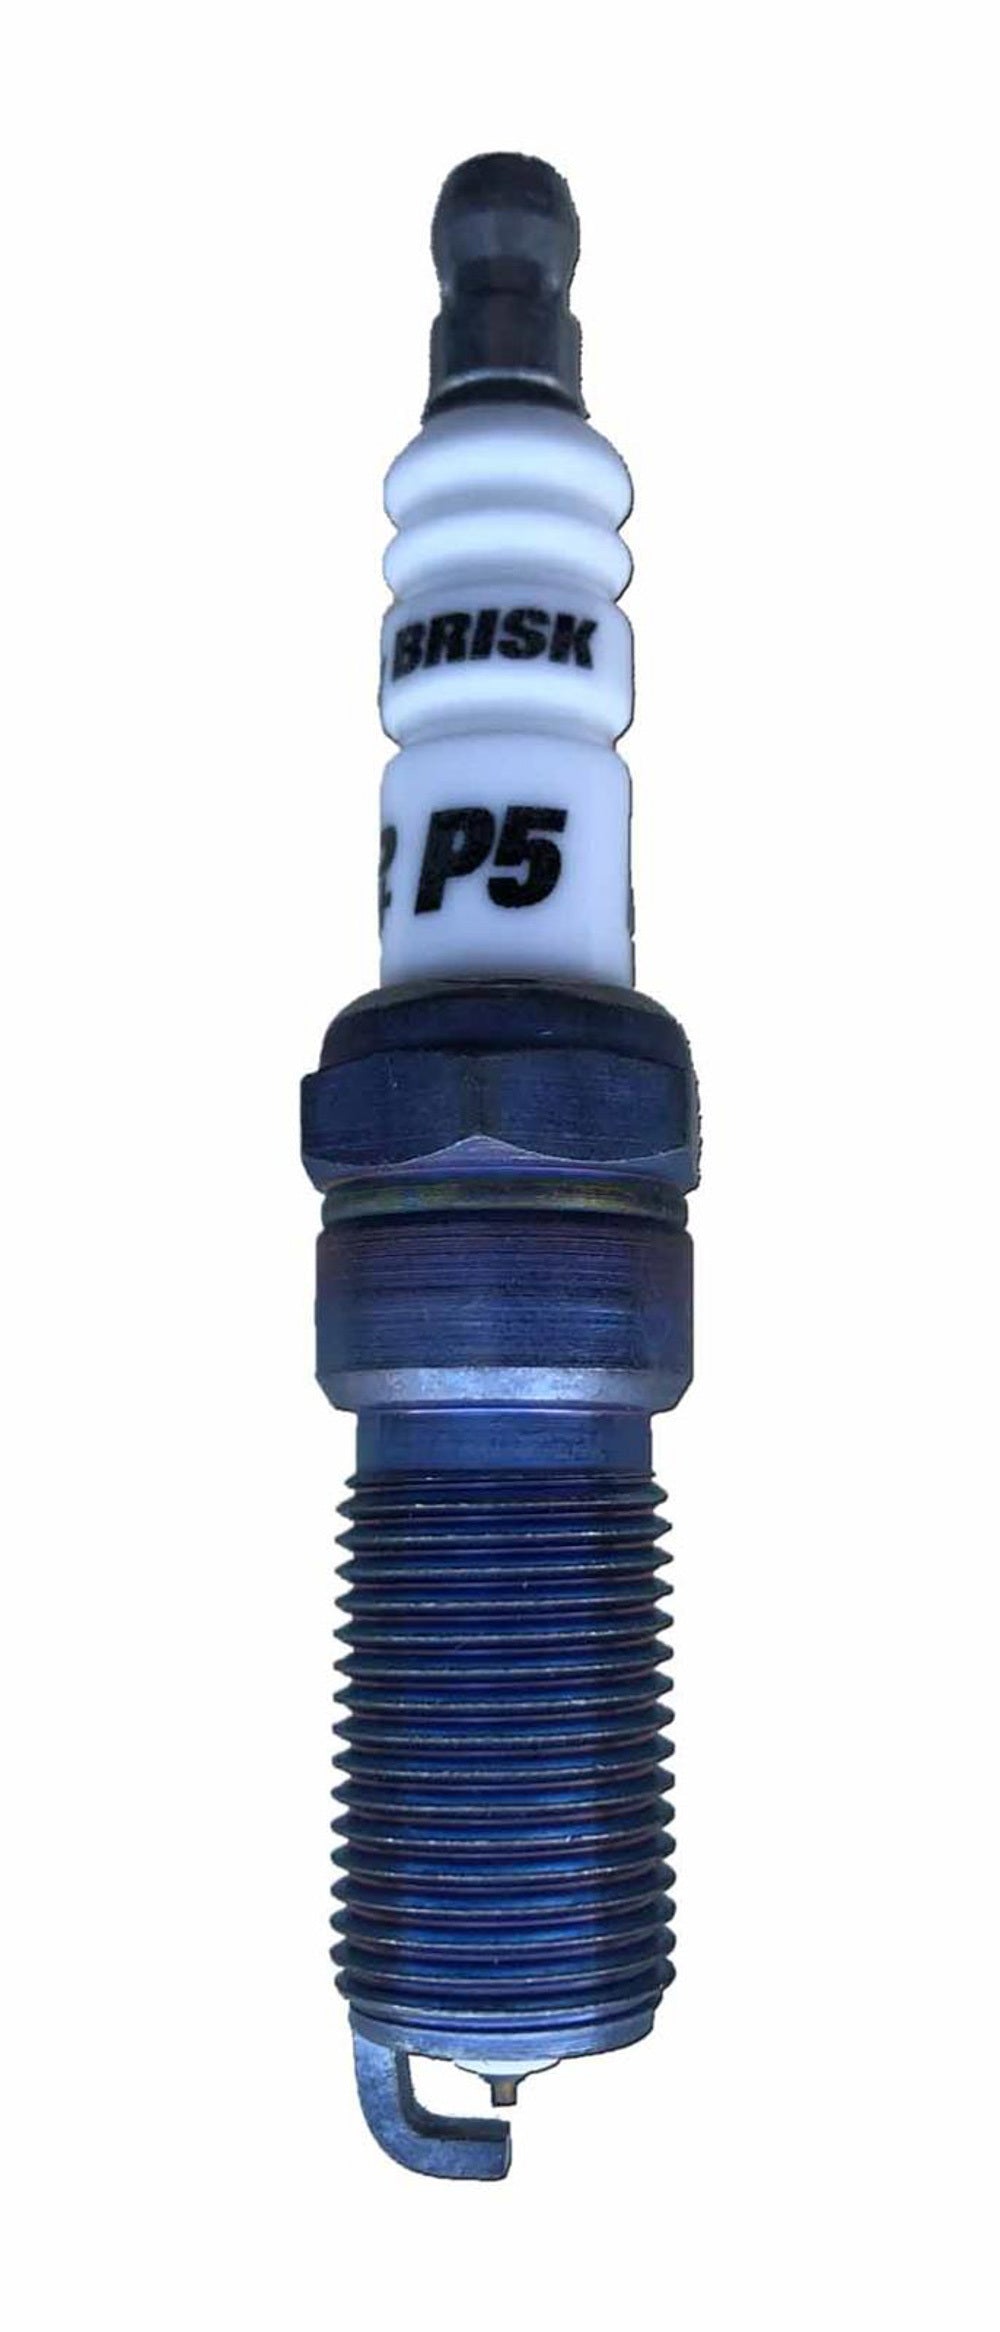 Brisk Racing Spark Plugs Spark Plug Iridium Performance BSKP5-RR15YIR